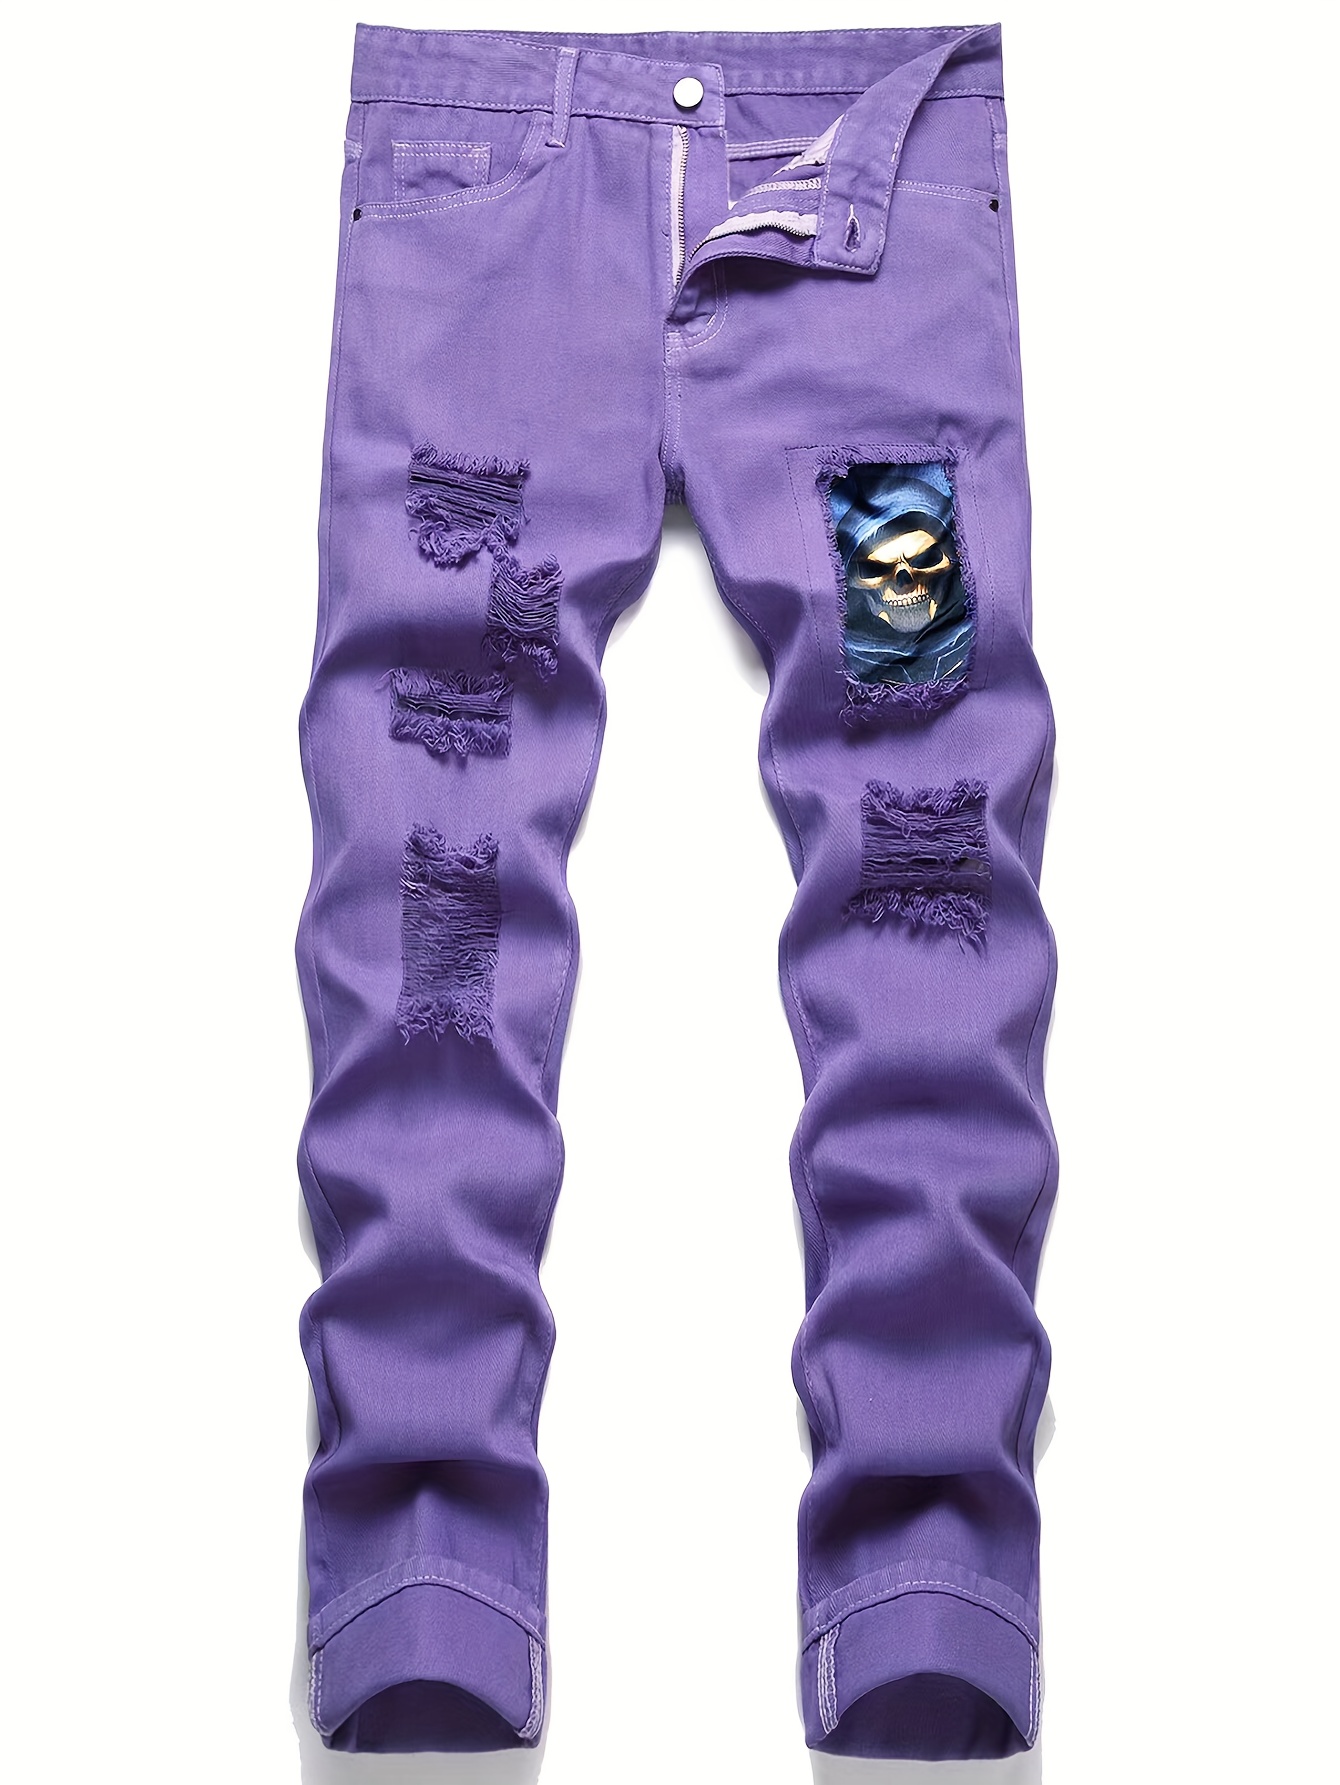 Purple Jeans Designer With Tag Men Purple Jeans Brand Mens Jeans